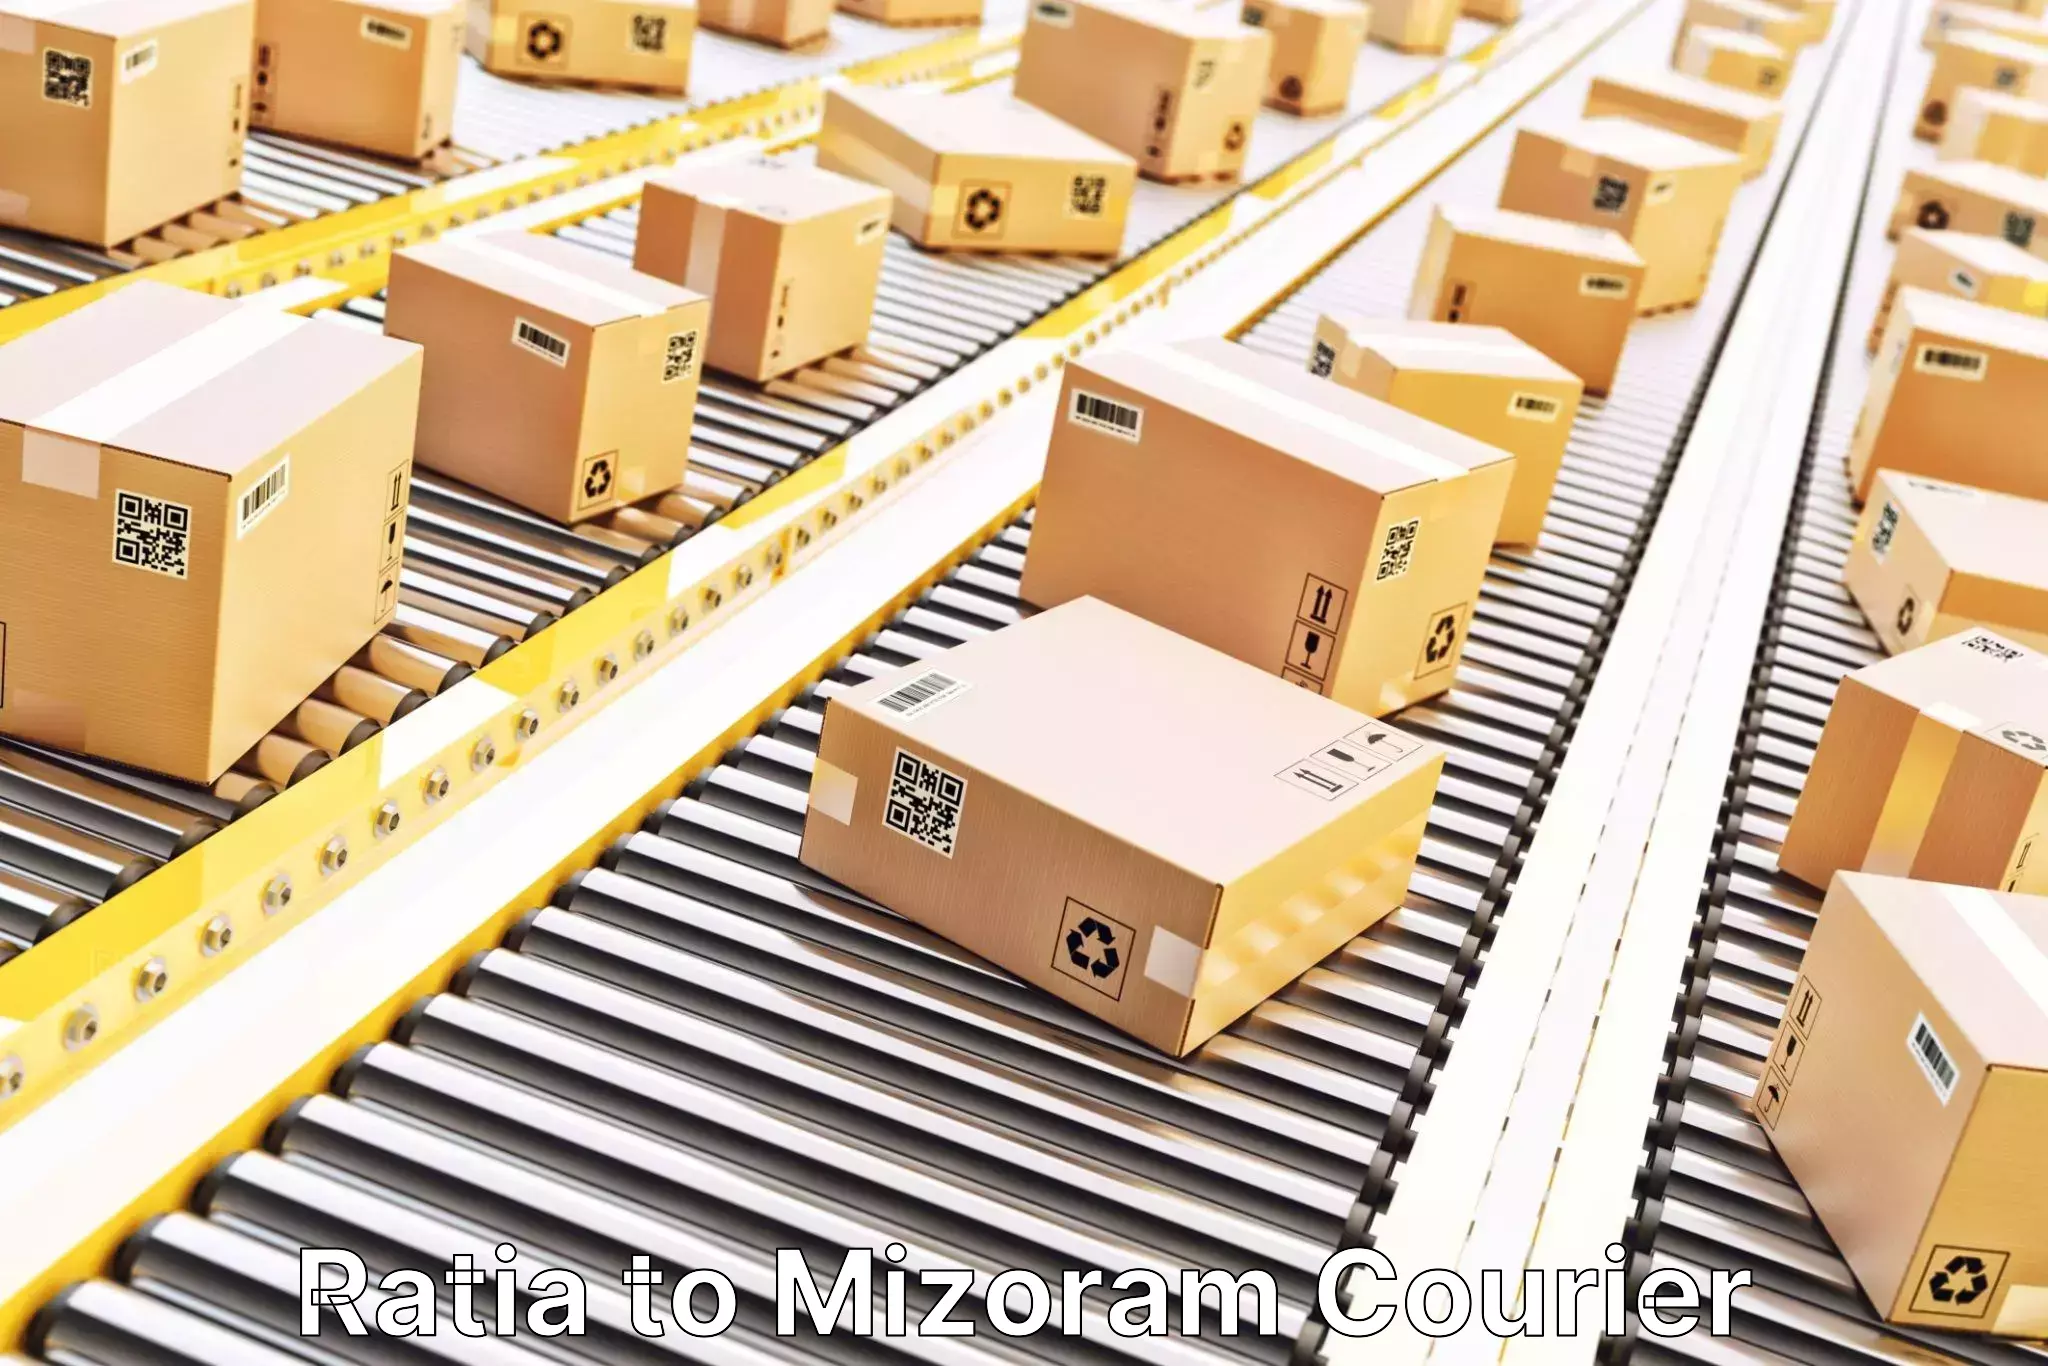 Reliable courier service Ratia to Mizoram